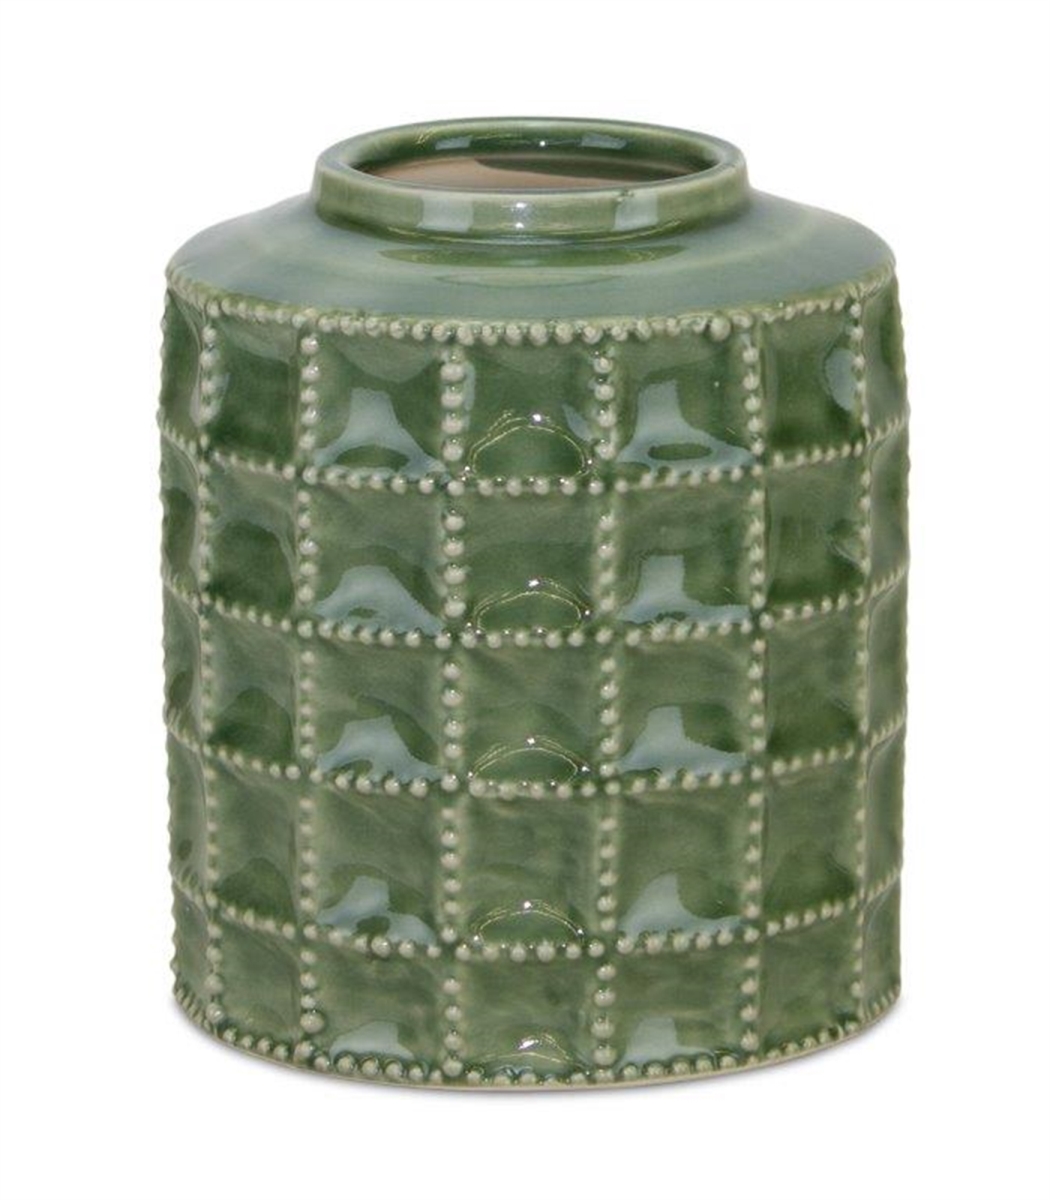 UPC 746427822930 product image for International 82293 Terracotta Vase | upcitemdb.com